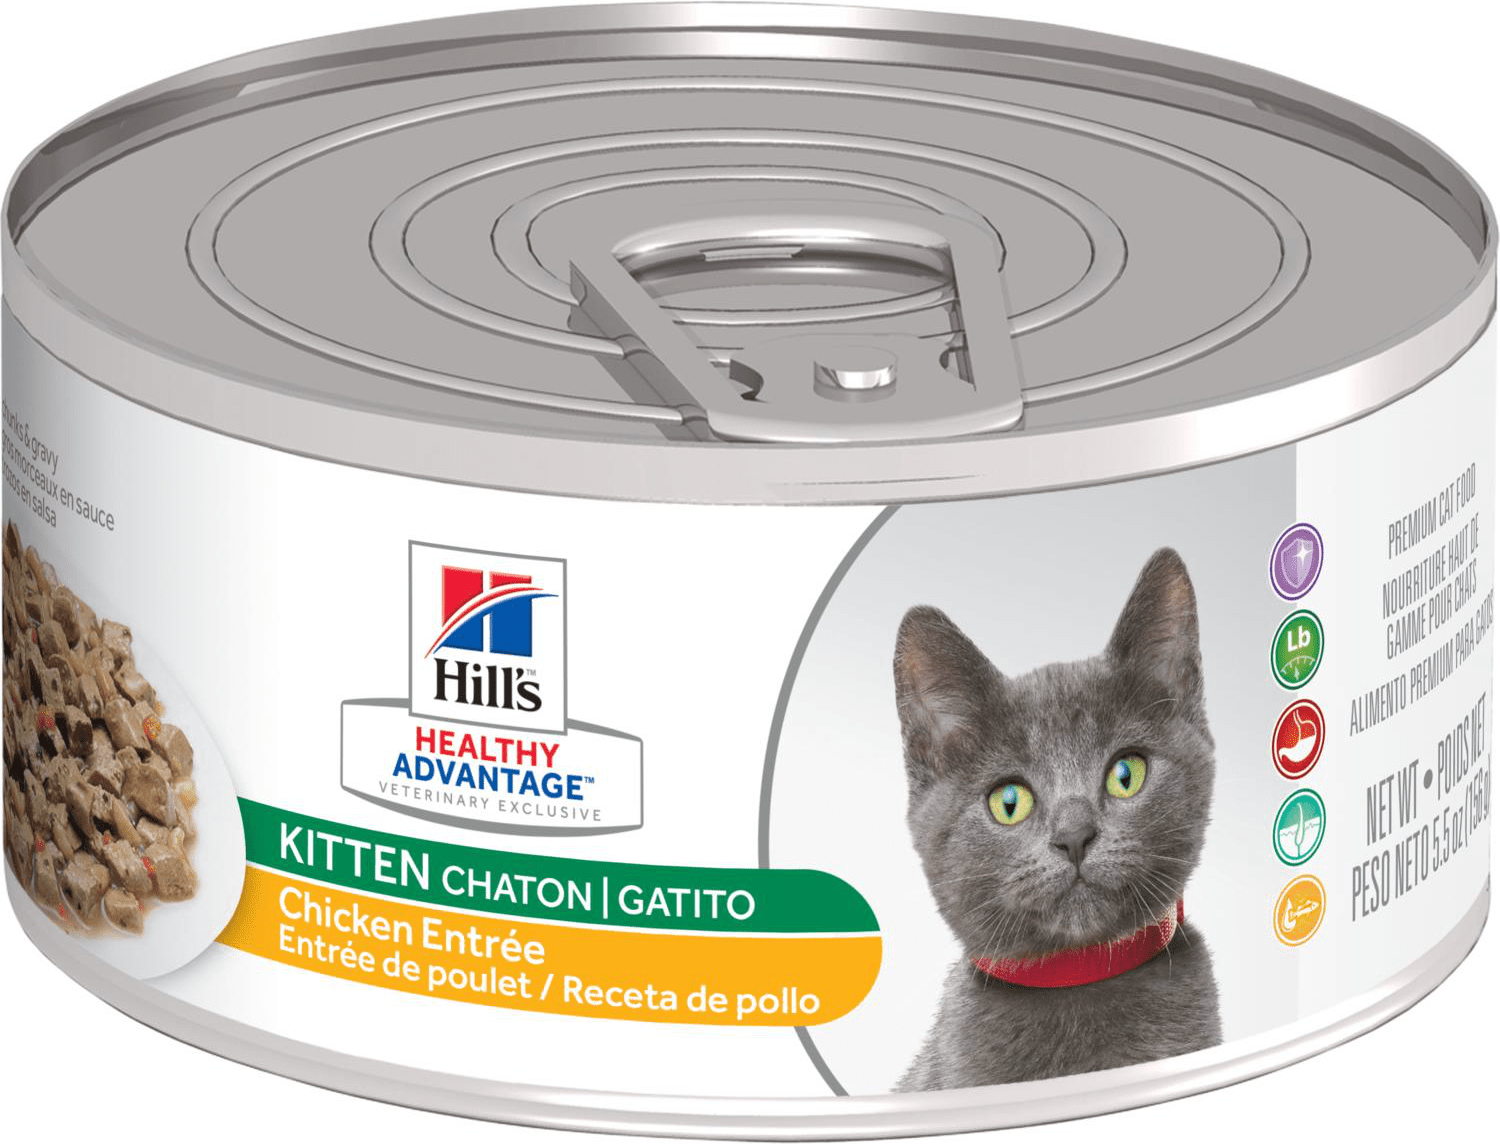 Hill's Healthy Advantage Kitten Chicken Entrée